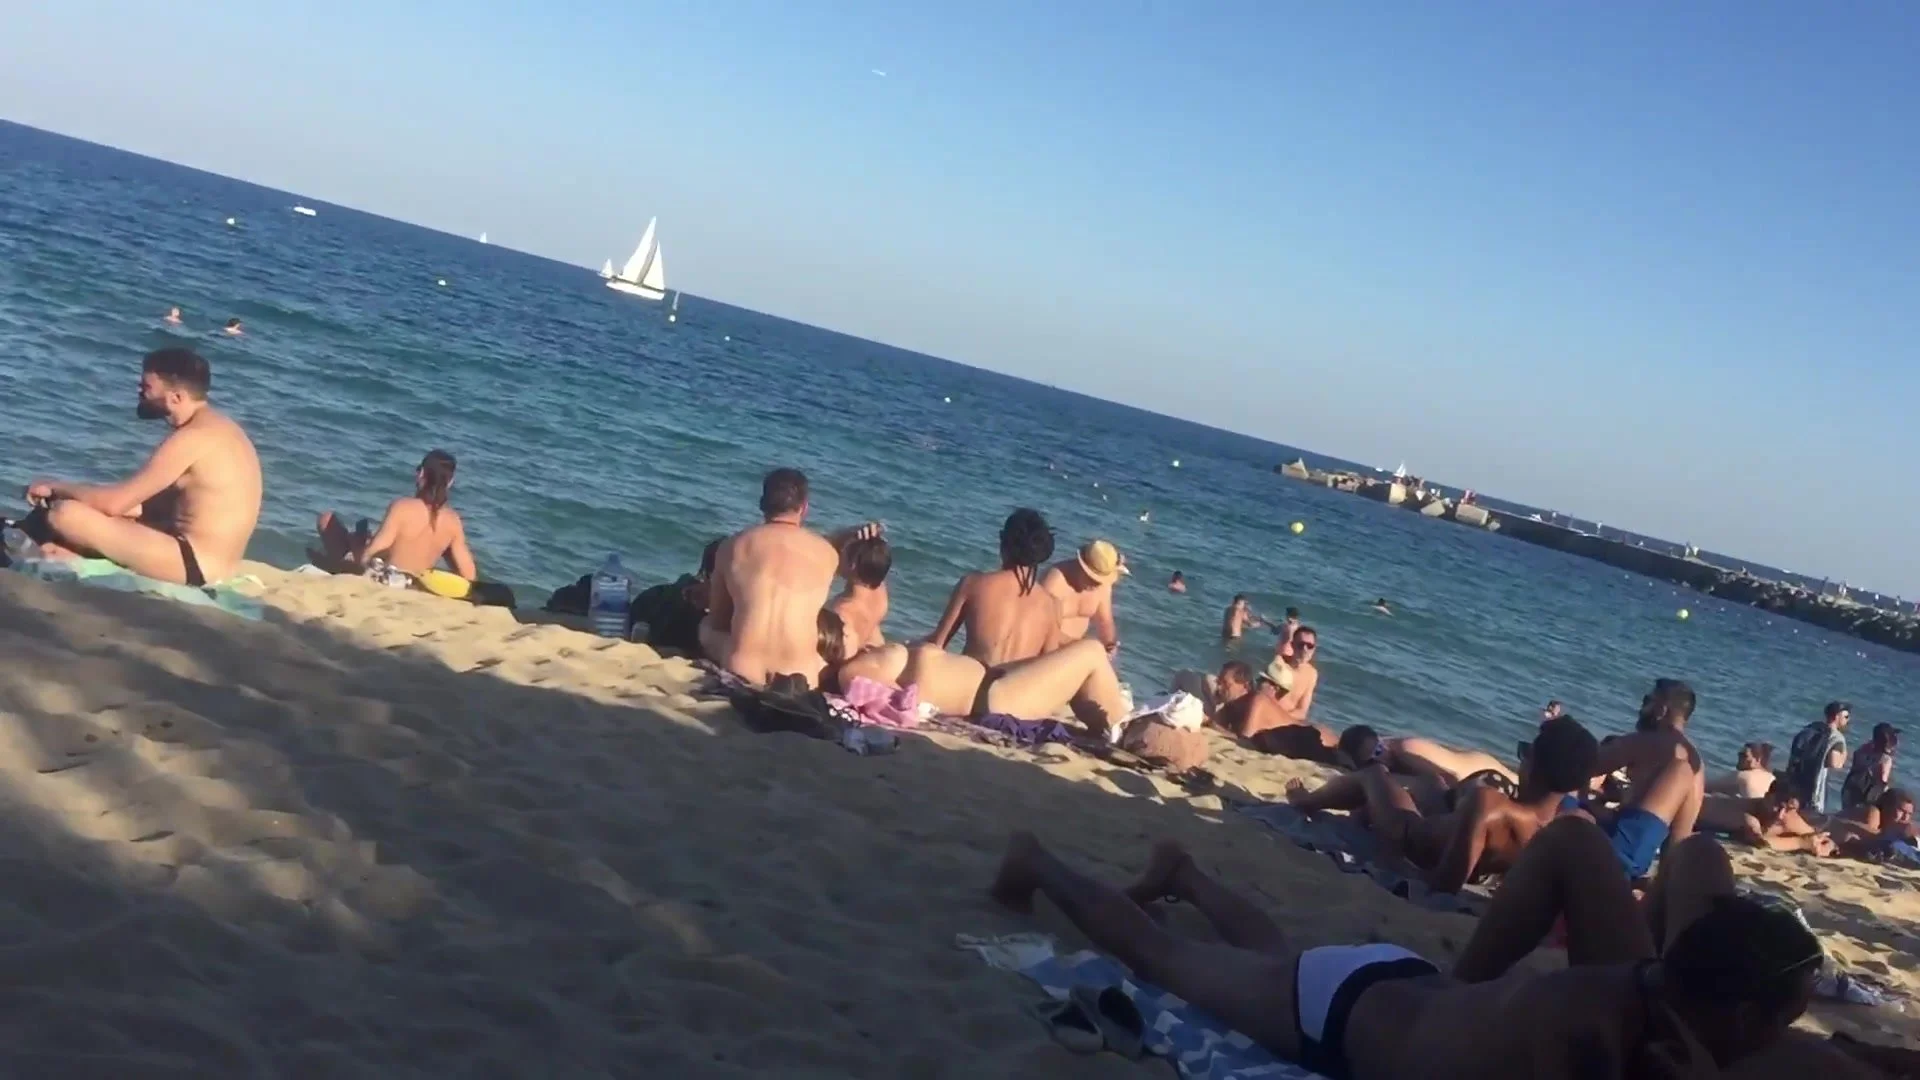 Nude, nudist, beach - video 3 photo photo